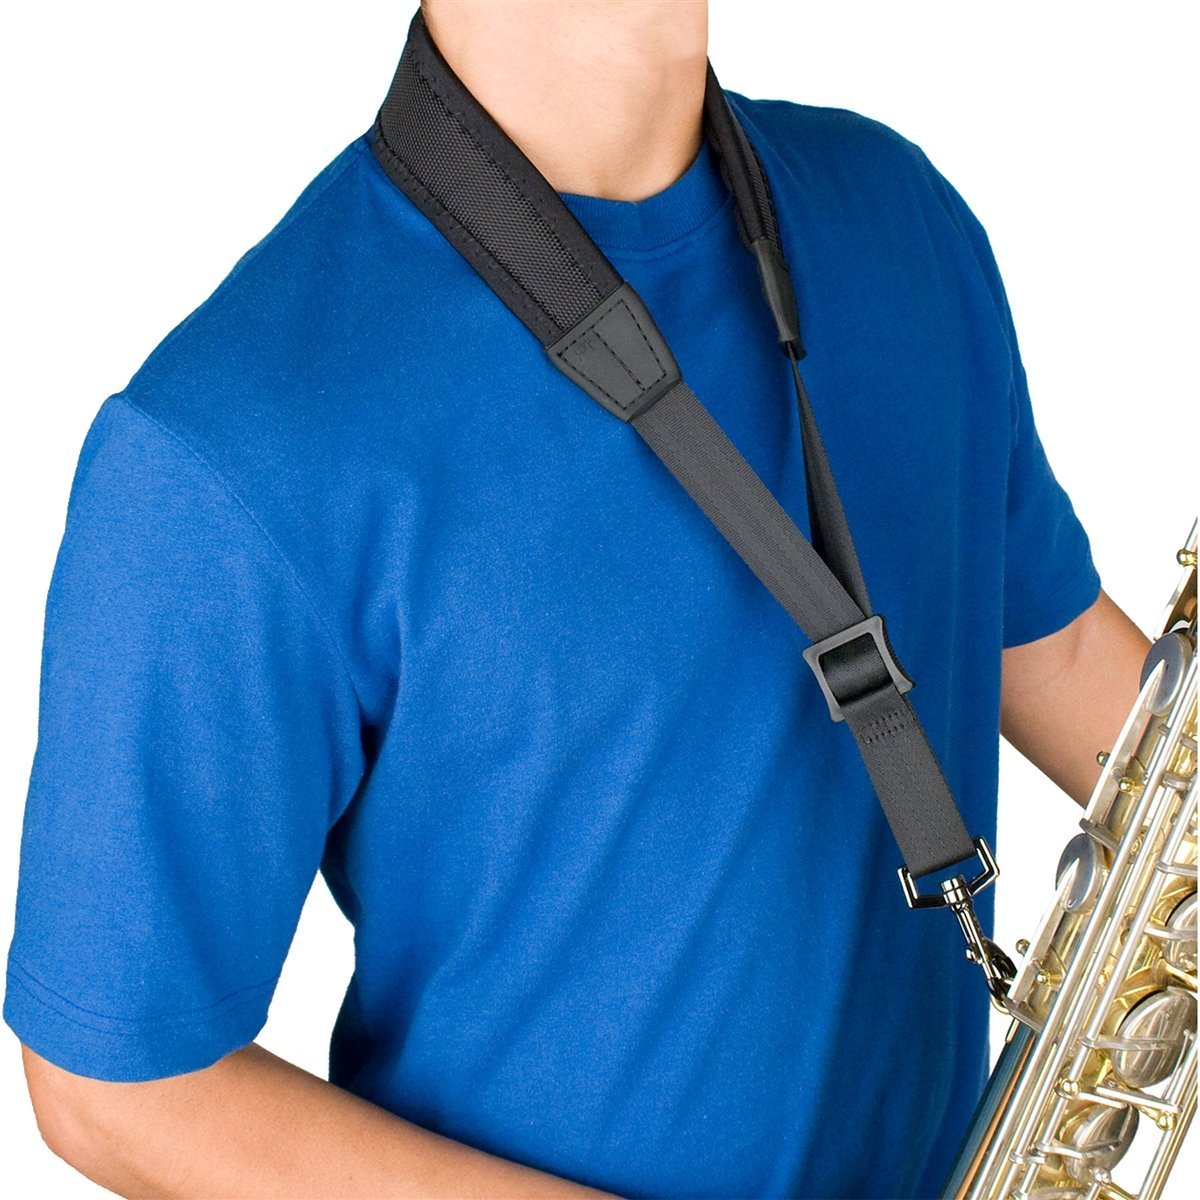 Protec - 22â€³ (Regular) Ballistic Neoprene Less-Stress Saxophone Neck Strap-Accessories-Protec-Black-Music Elements